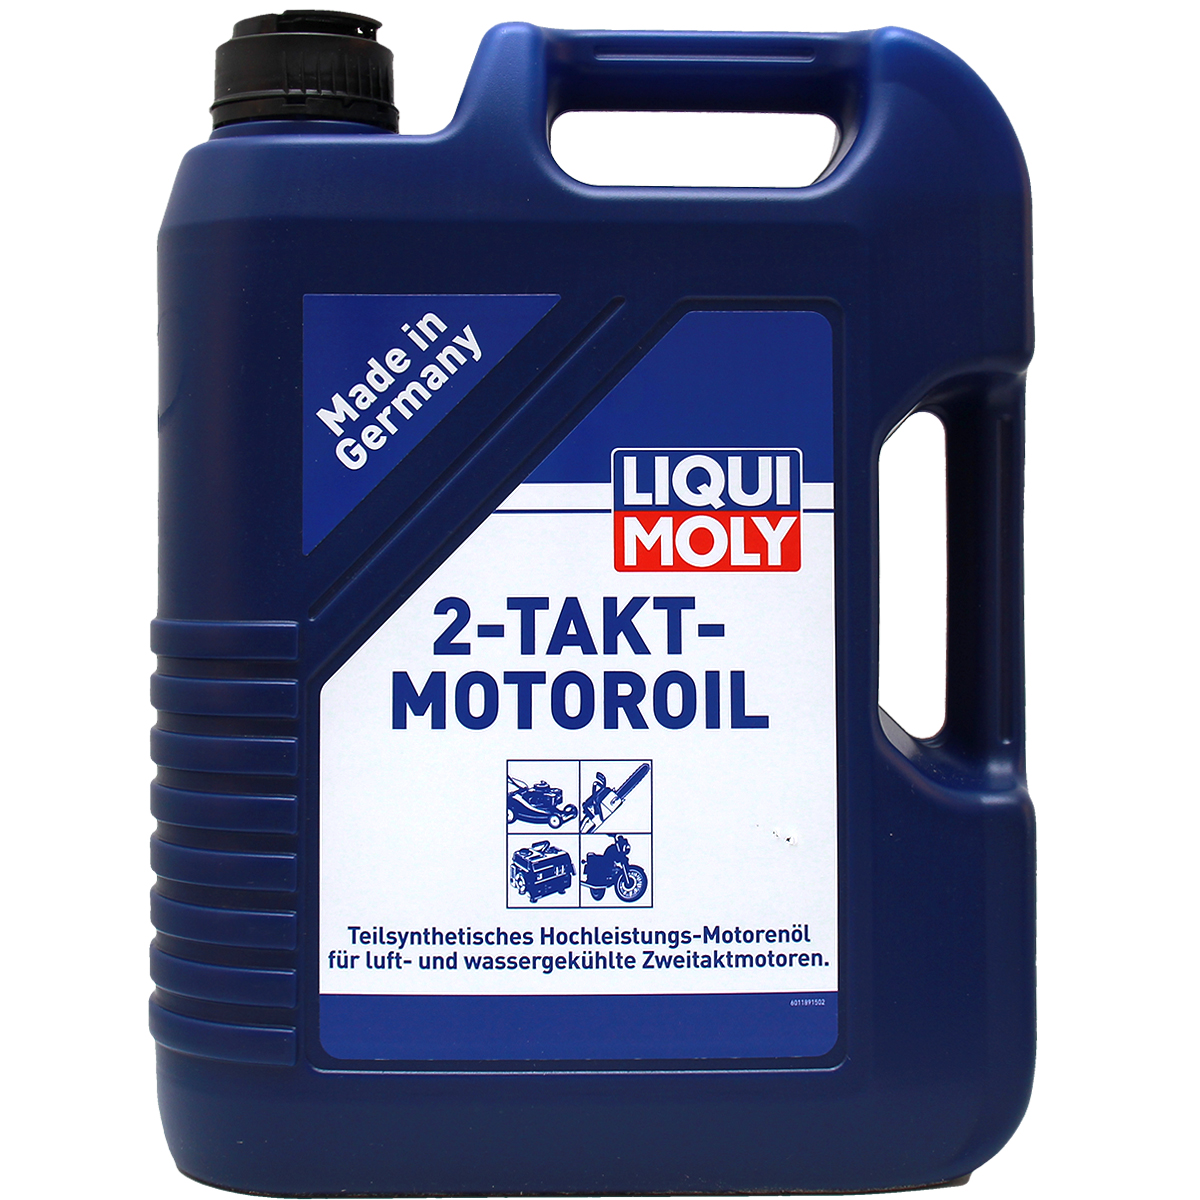 Liqui Moly 2-Takt-Motoroil 5 Liter